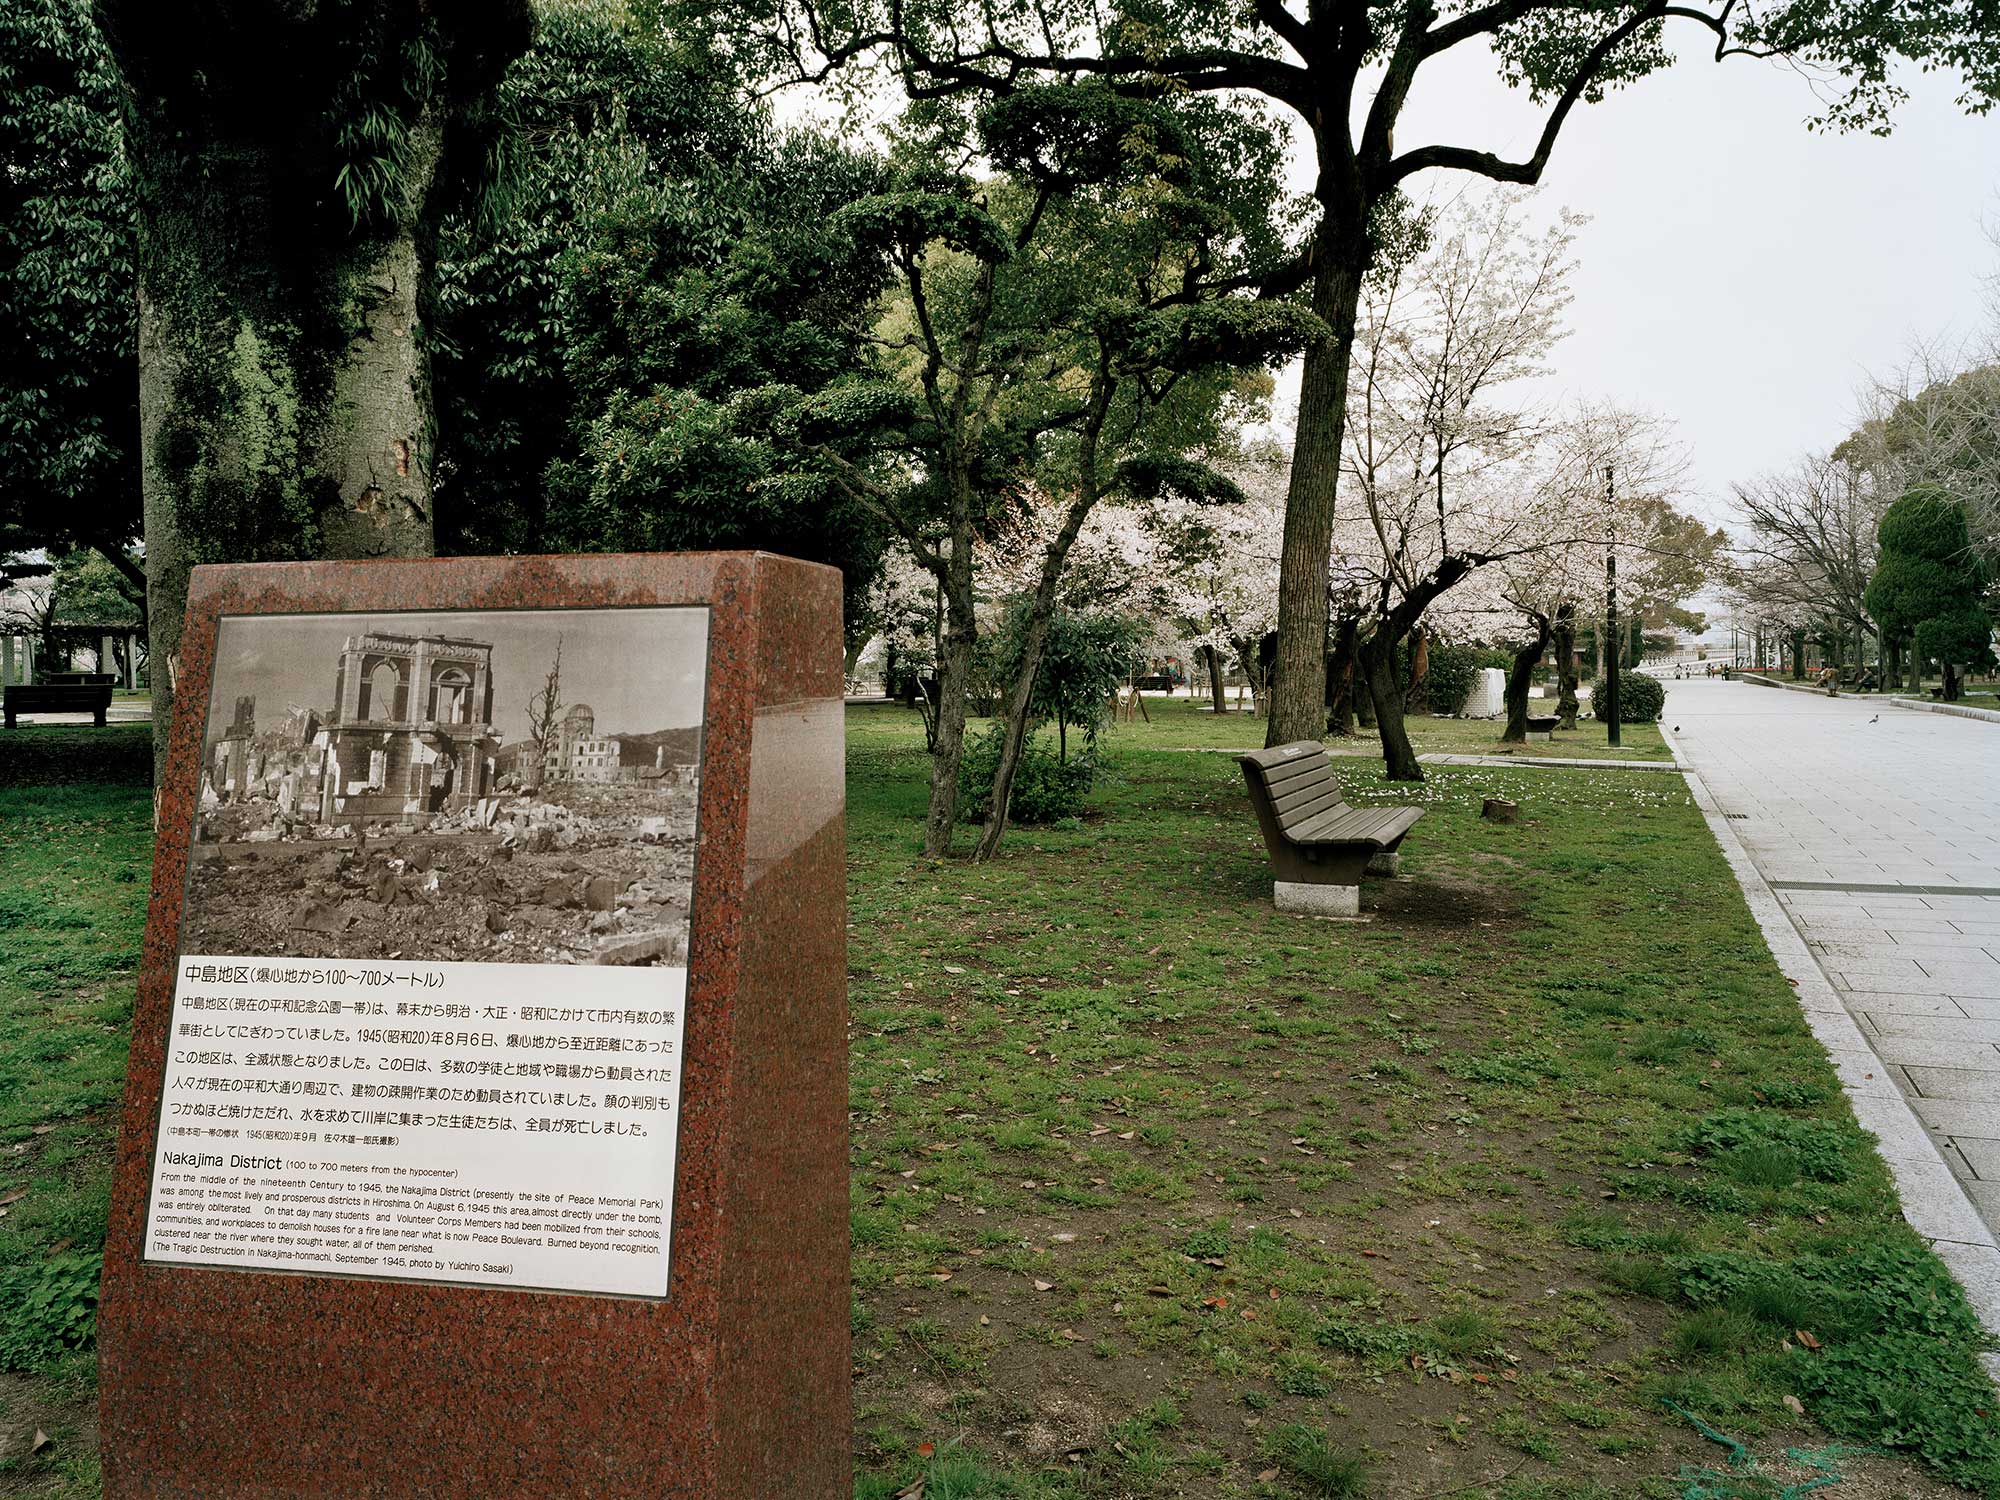 Nakajima District, Hiroshima, 100 to 700 meters from the hypocenter, photograph by Yuichiro Sasaki, September 1945, 2013, Chromogenic print, 30 x 40 inch.